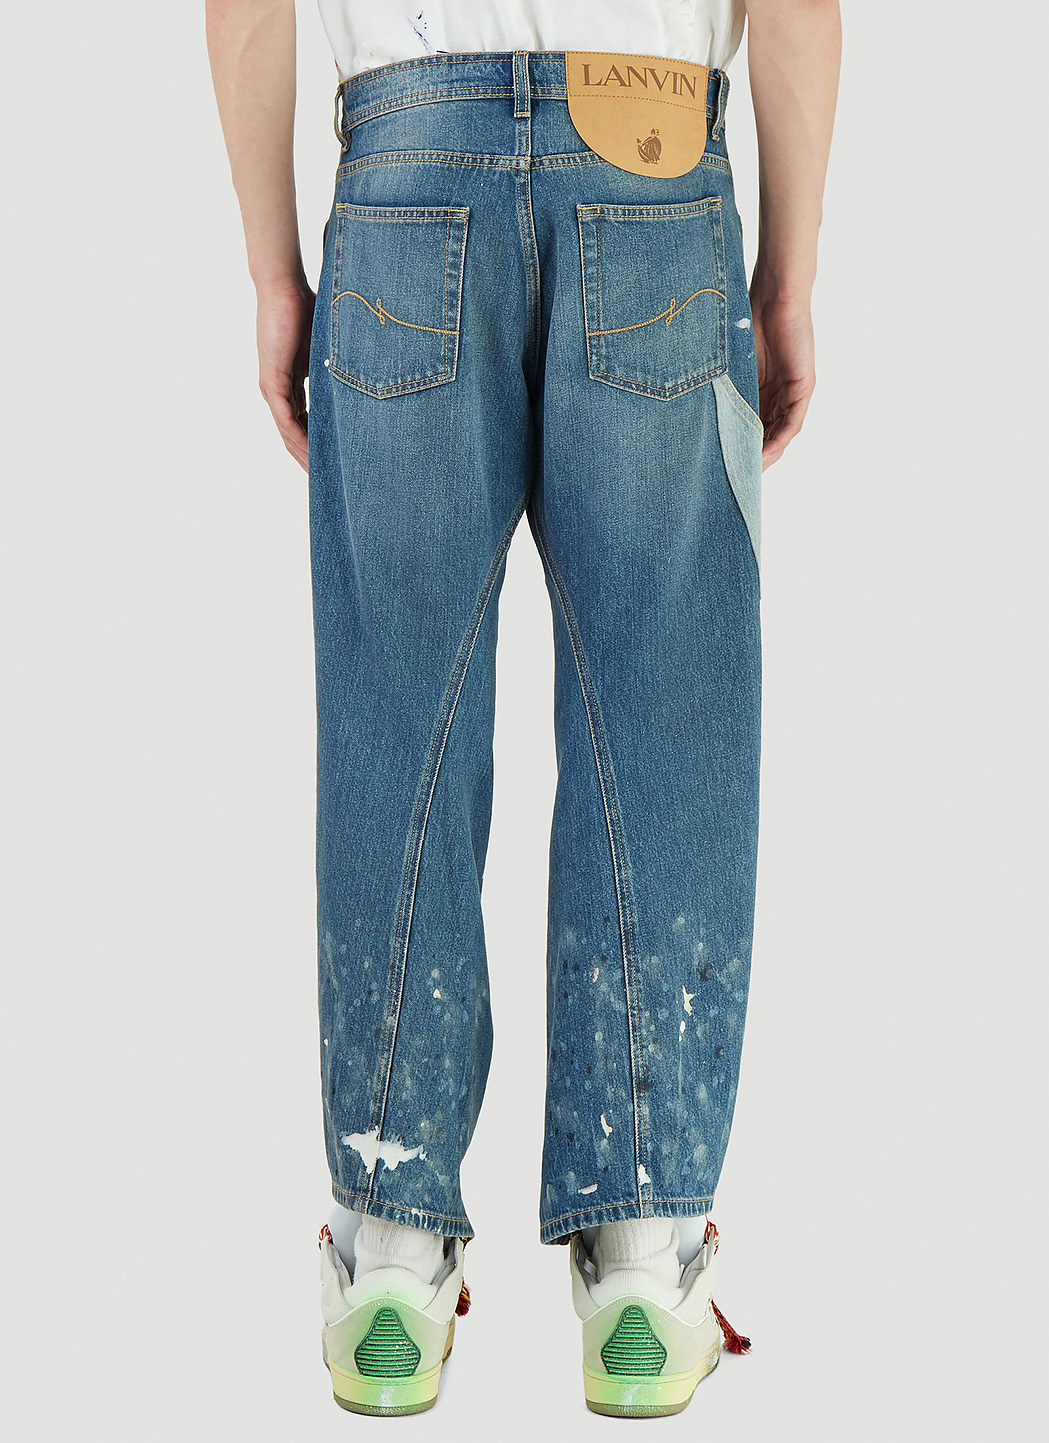 Lanvin X Gallery Dept. Men's Cut Jeans in Blue | LN-CC